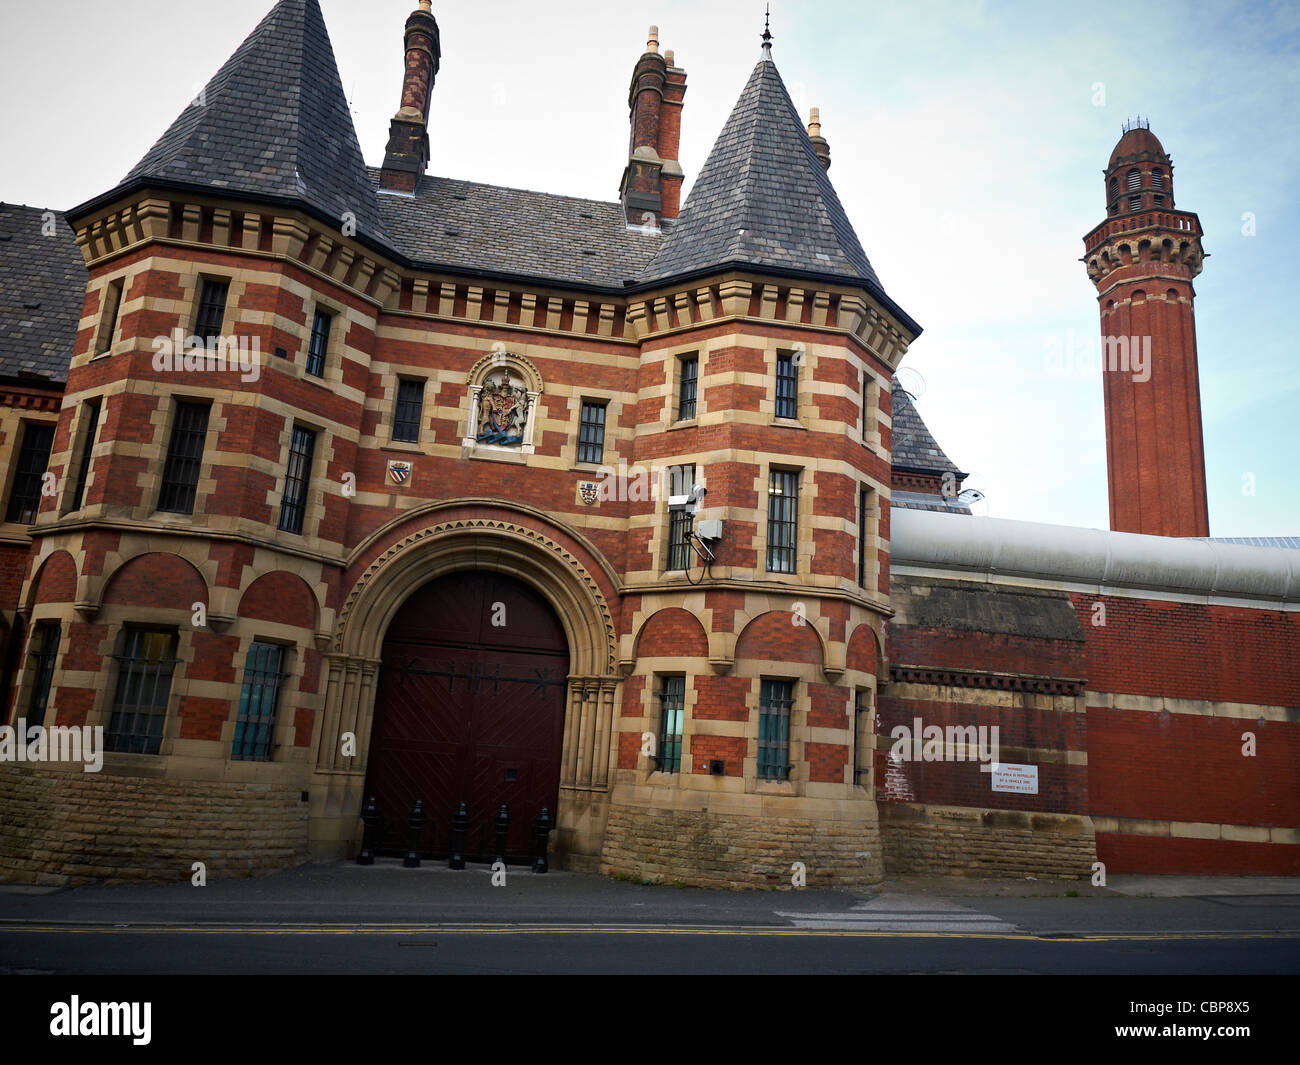 Entrance to Strangeways Prison in Manchester UK Stock Photo